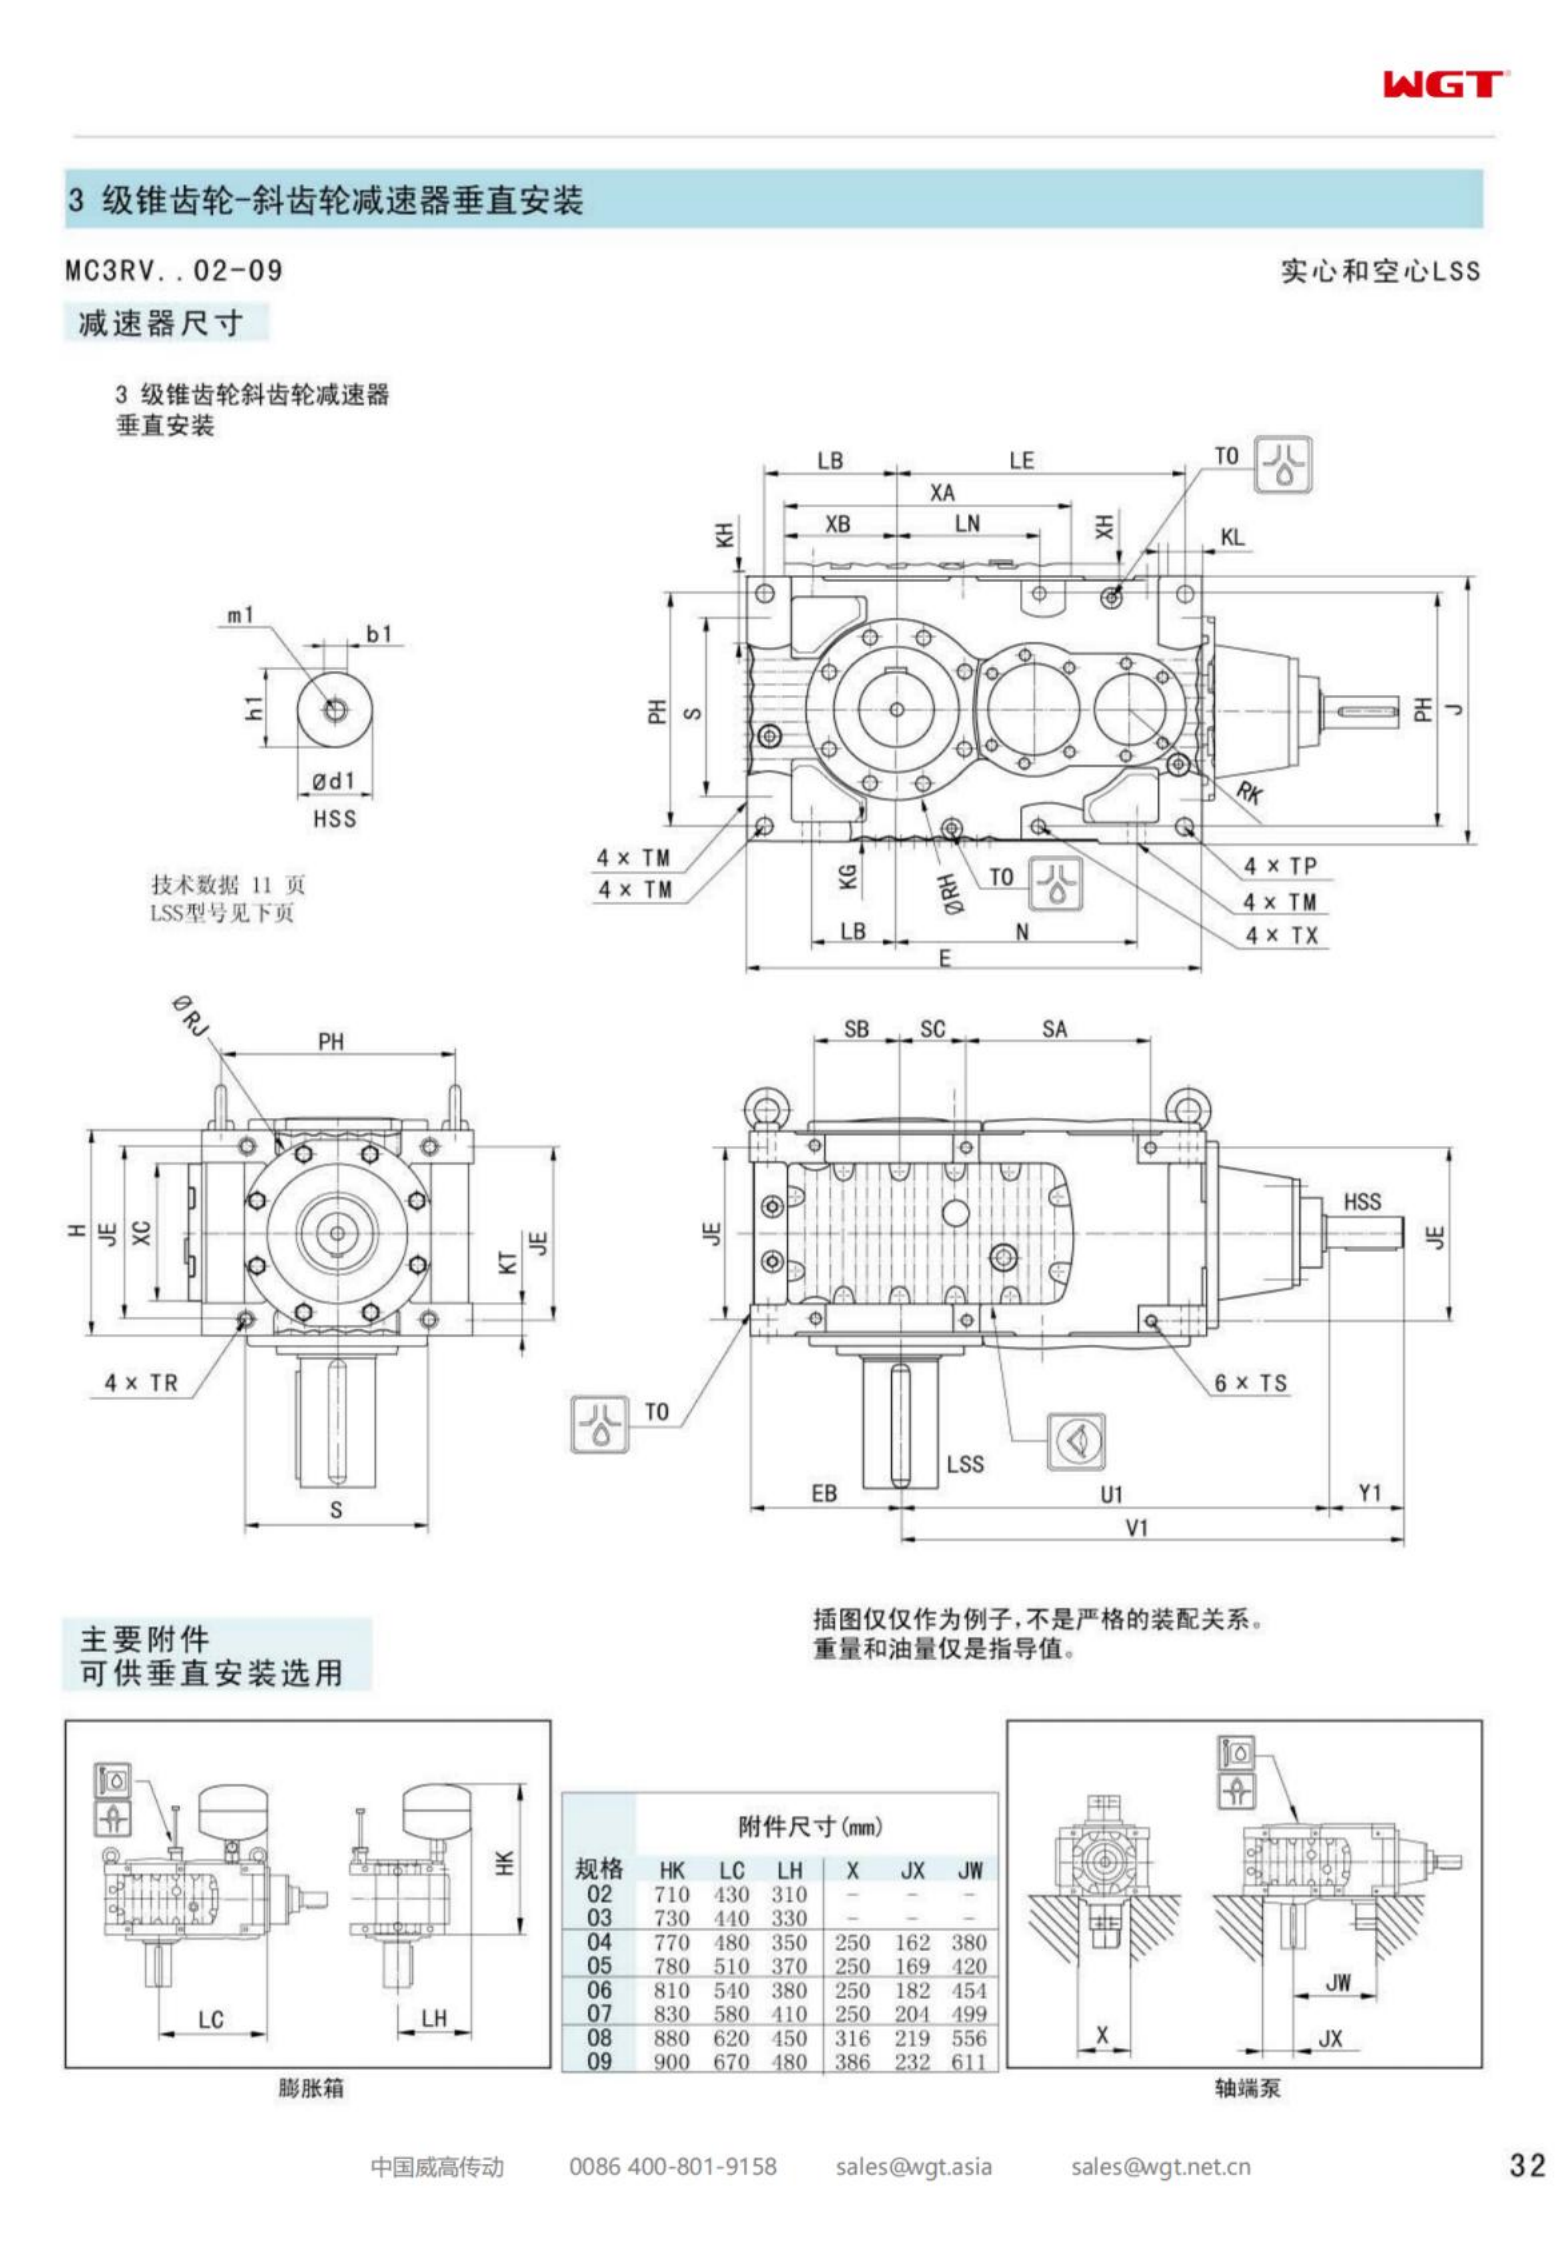 MC3RVST07 replaces _SEW_MC_Series gearbox (patent)